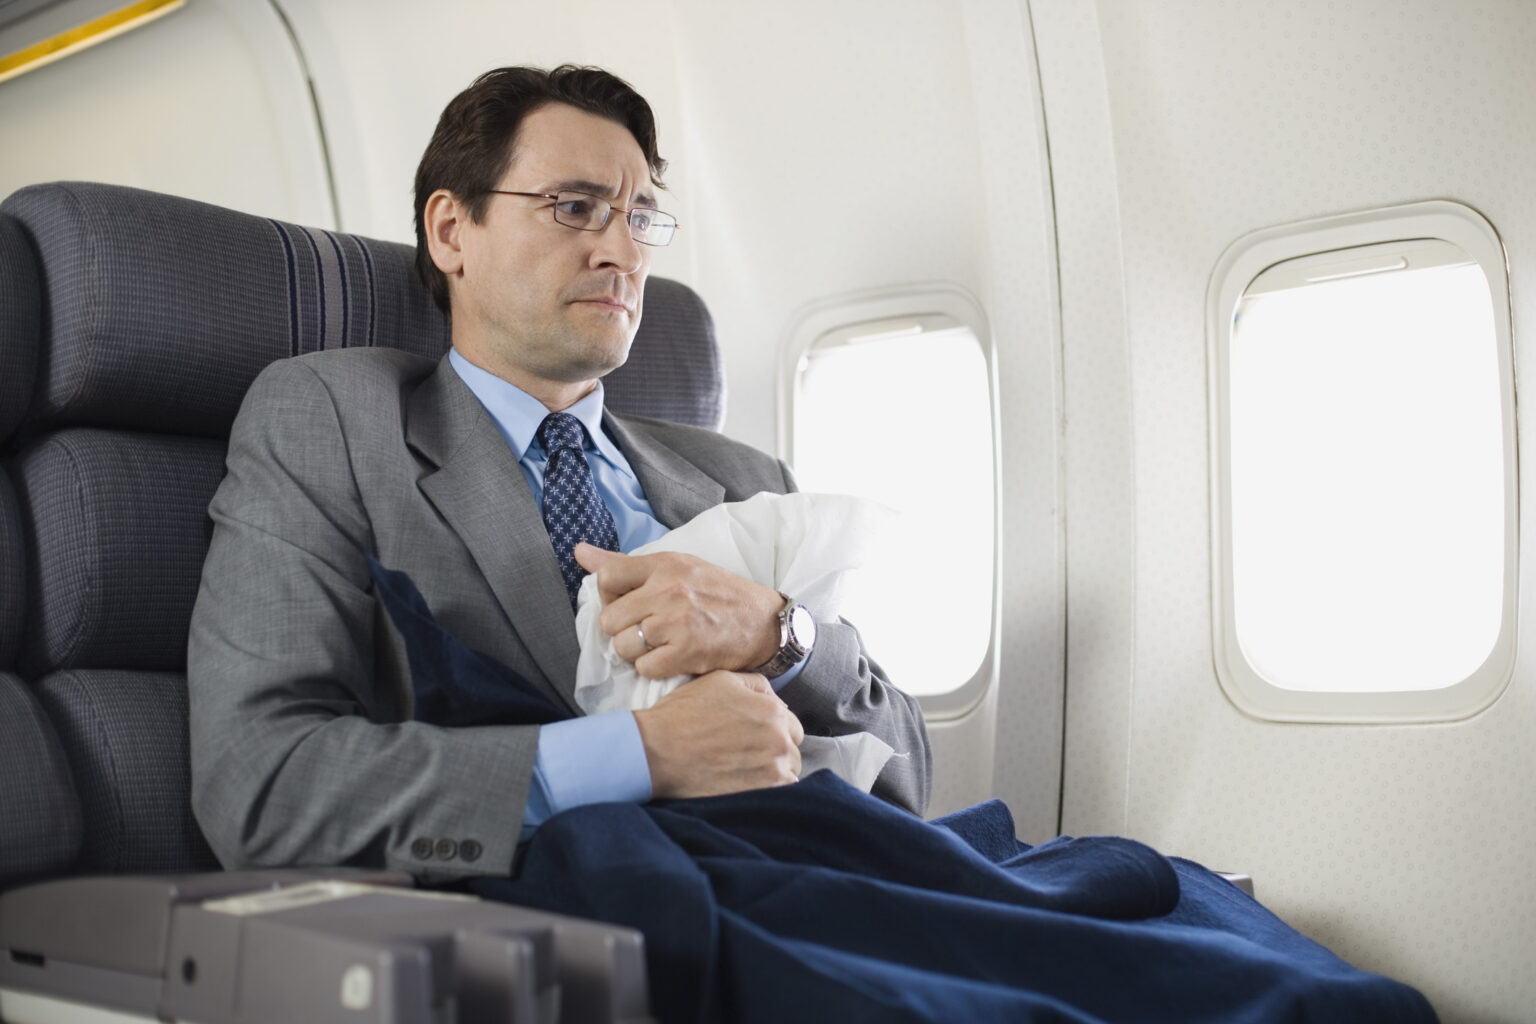 Nervous passenger sitting on airplane